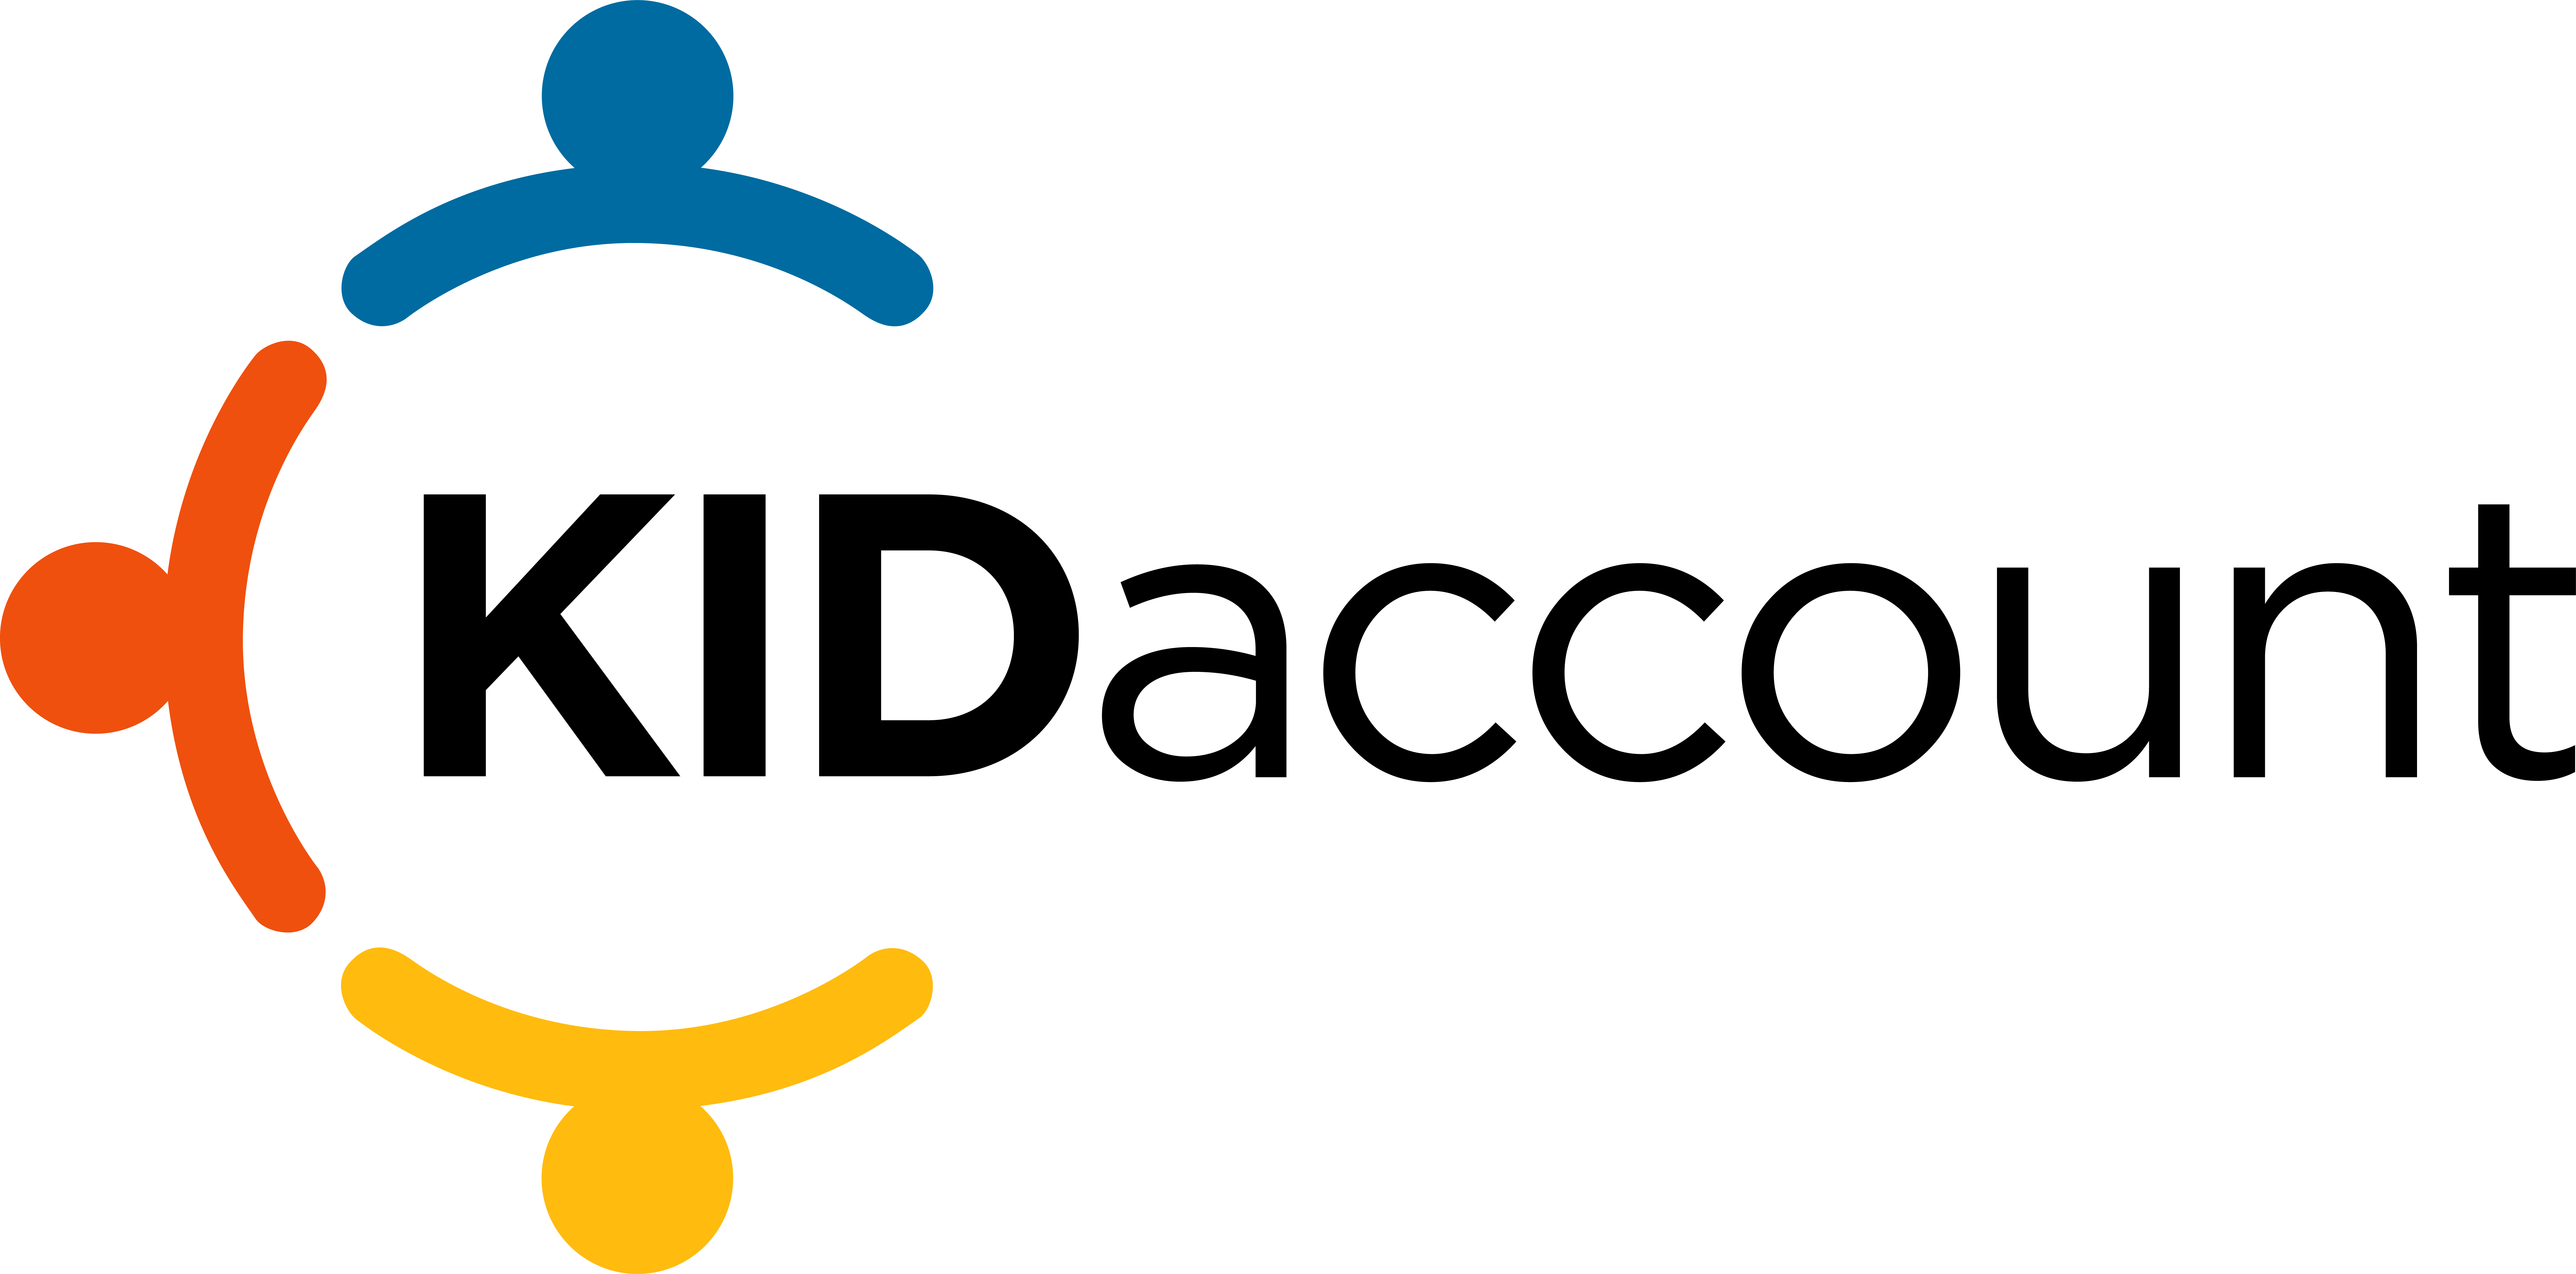 Amanda Breznay Joins KIDaccount as New Account Executive